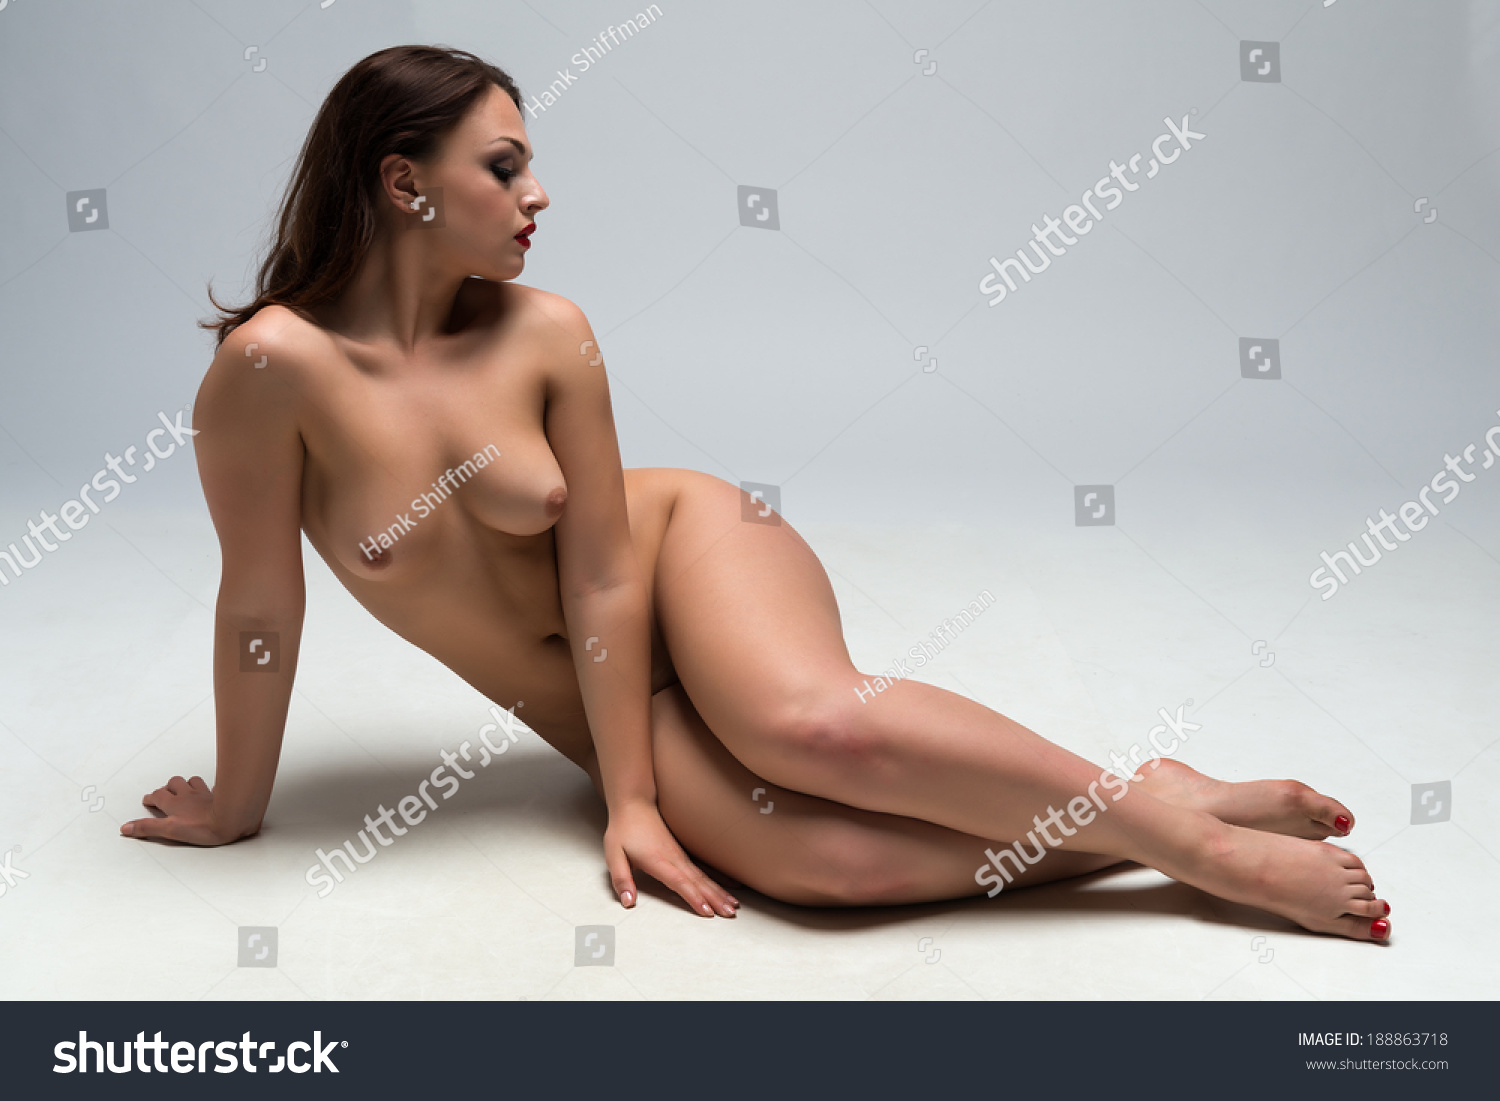 Nude On The Floor 2